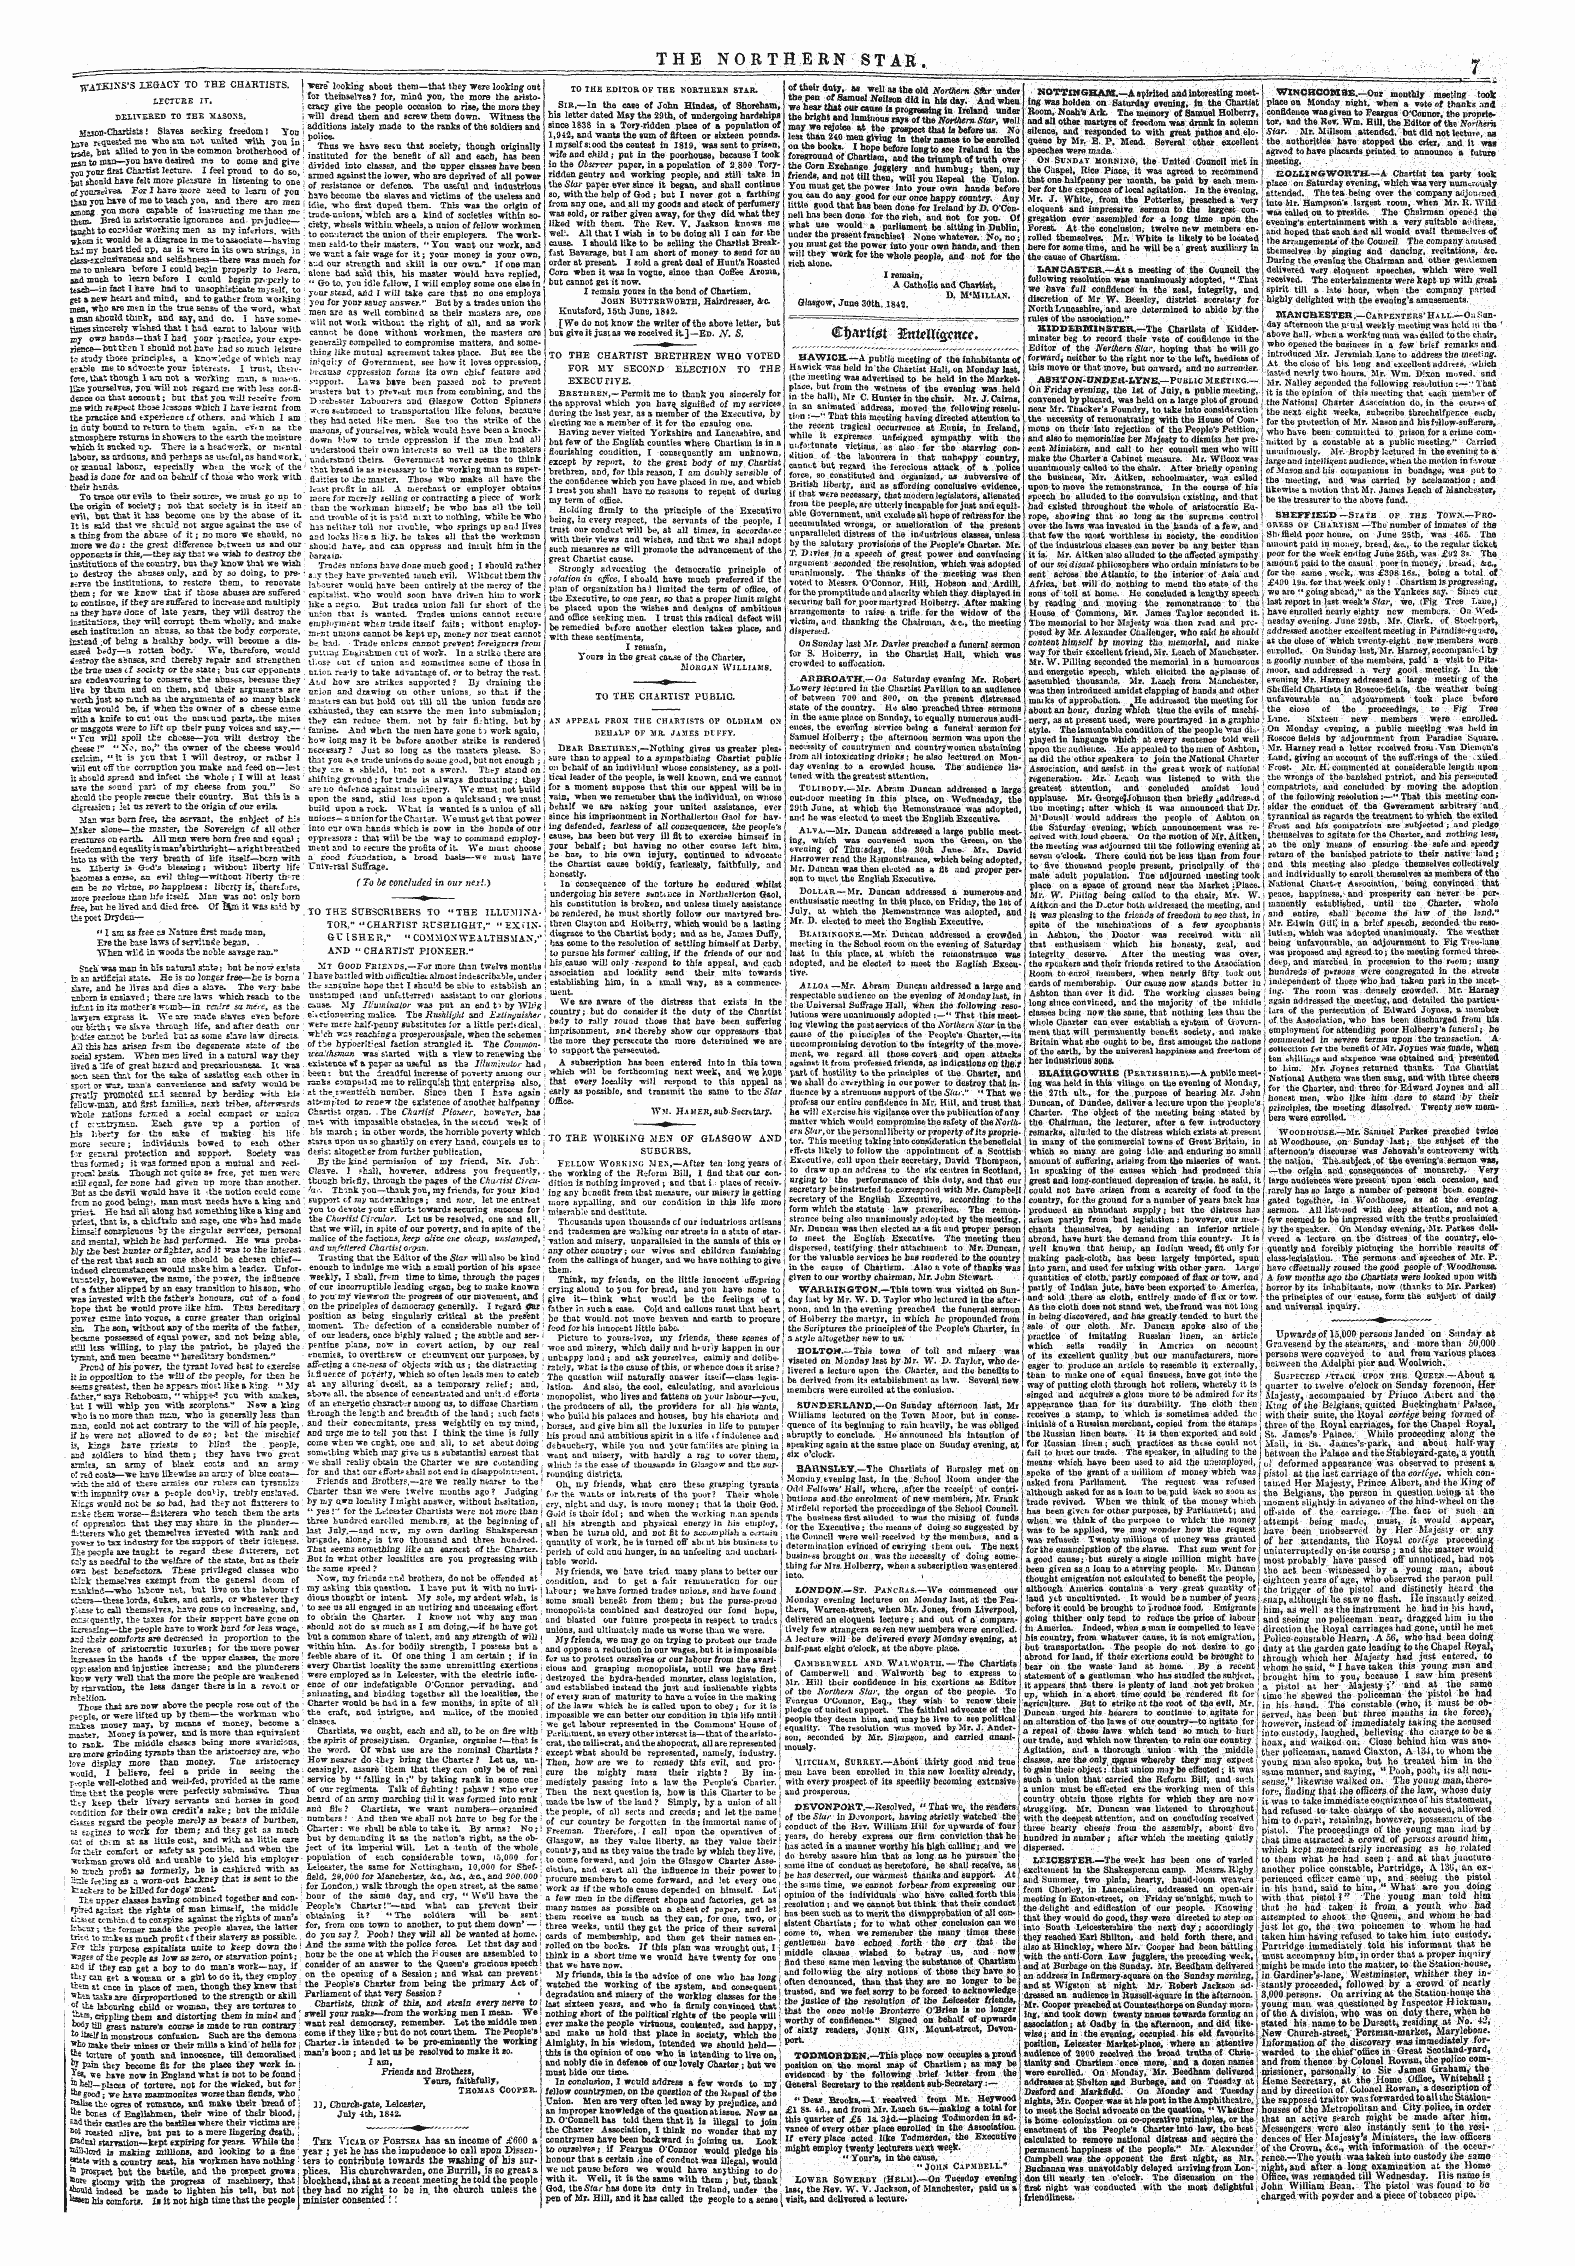 Northern Star (1837-1852): jS F Y, 3rd edition - Onijarttet Ewteut&Wtt.